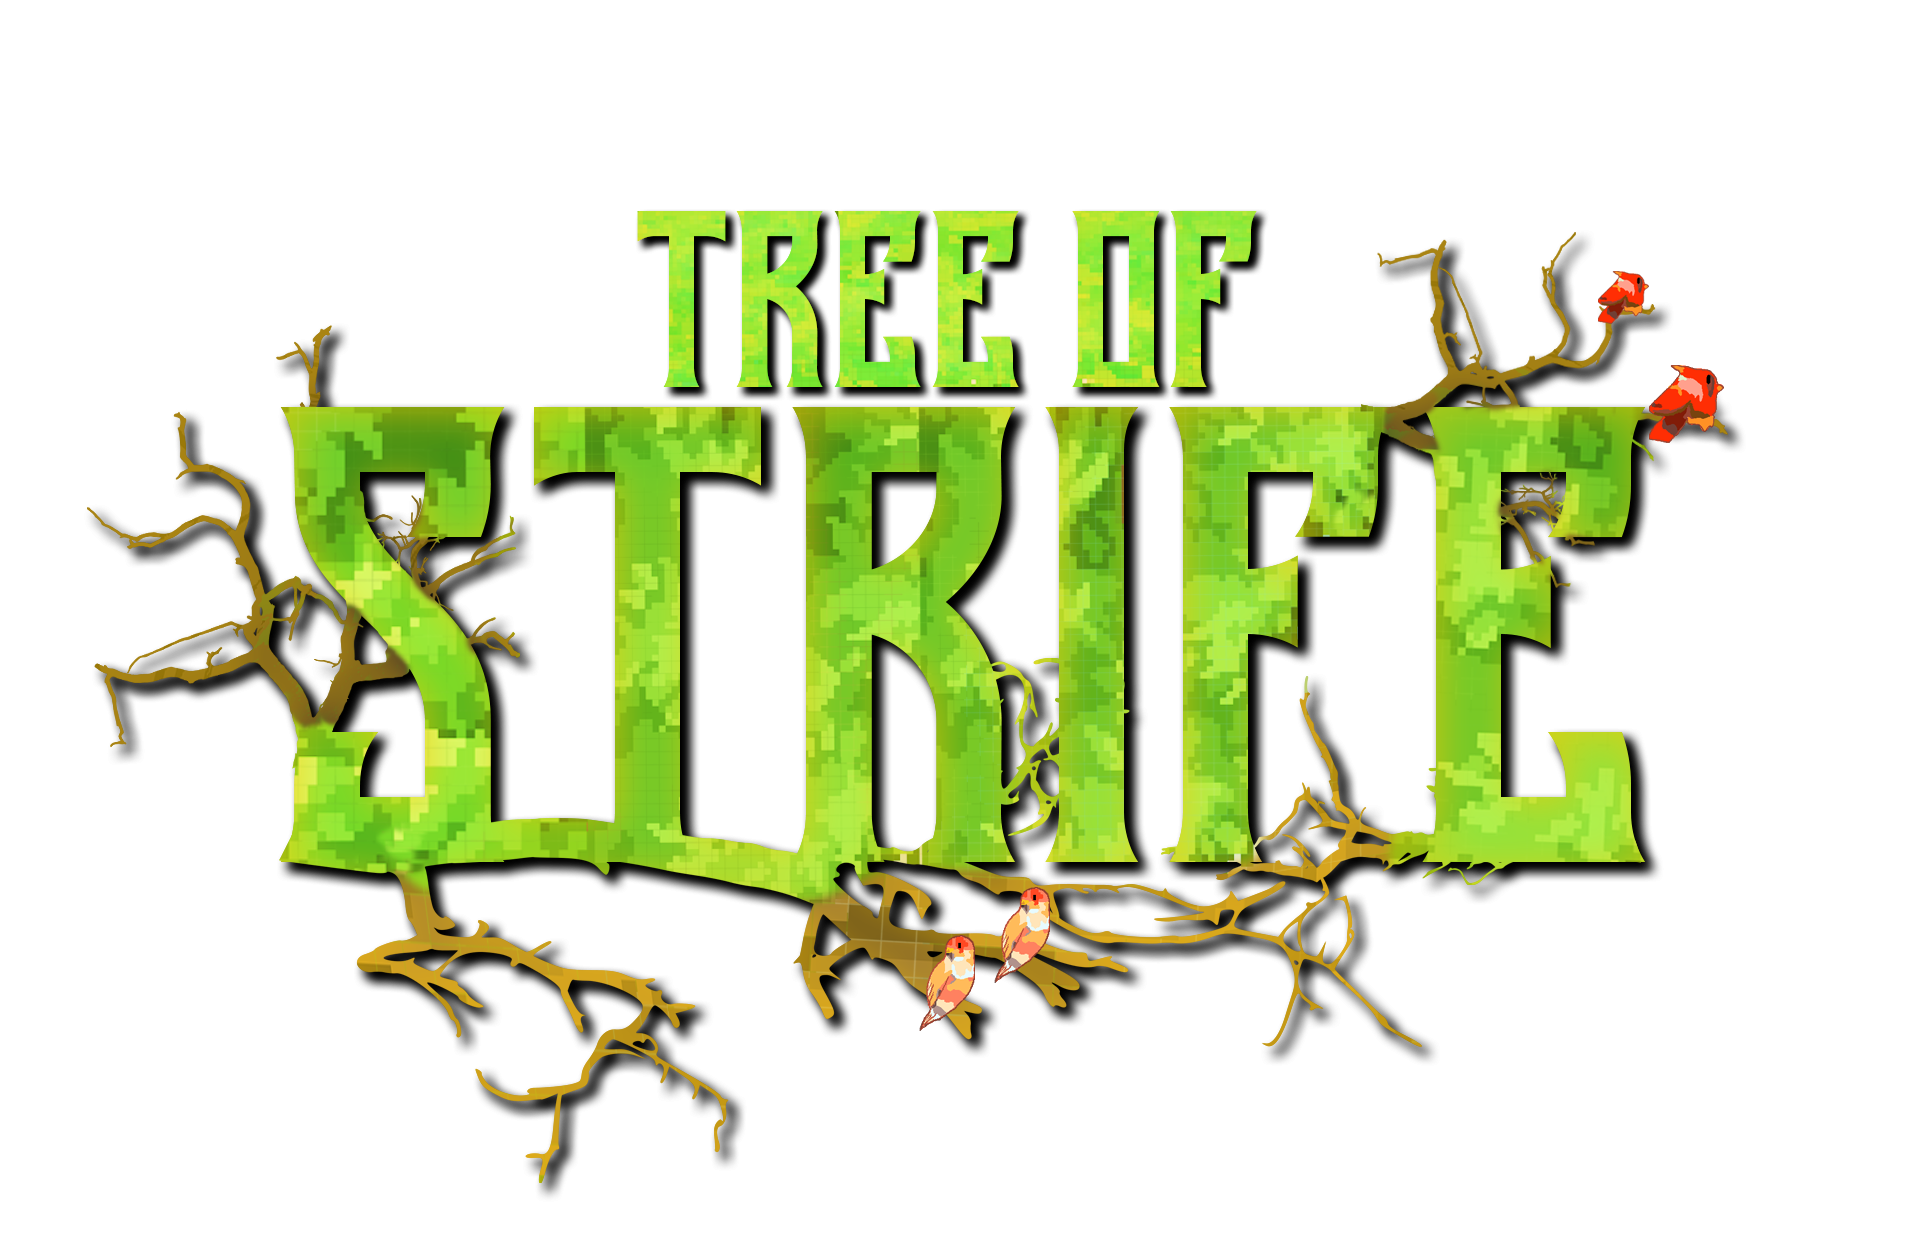 Tree of Strife